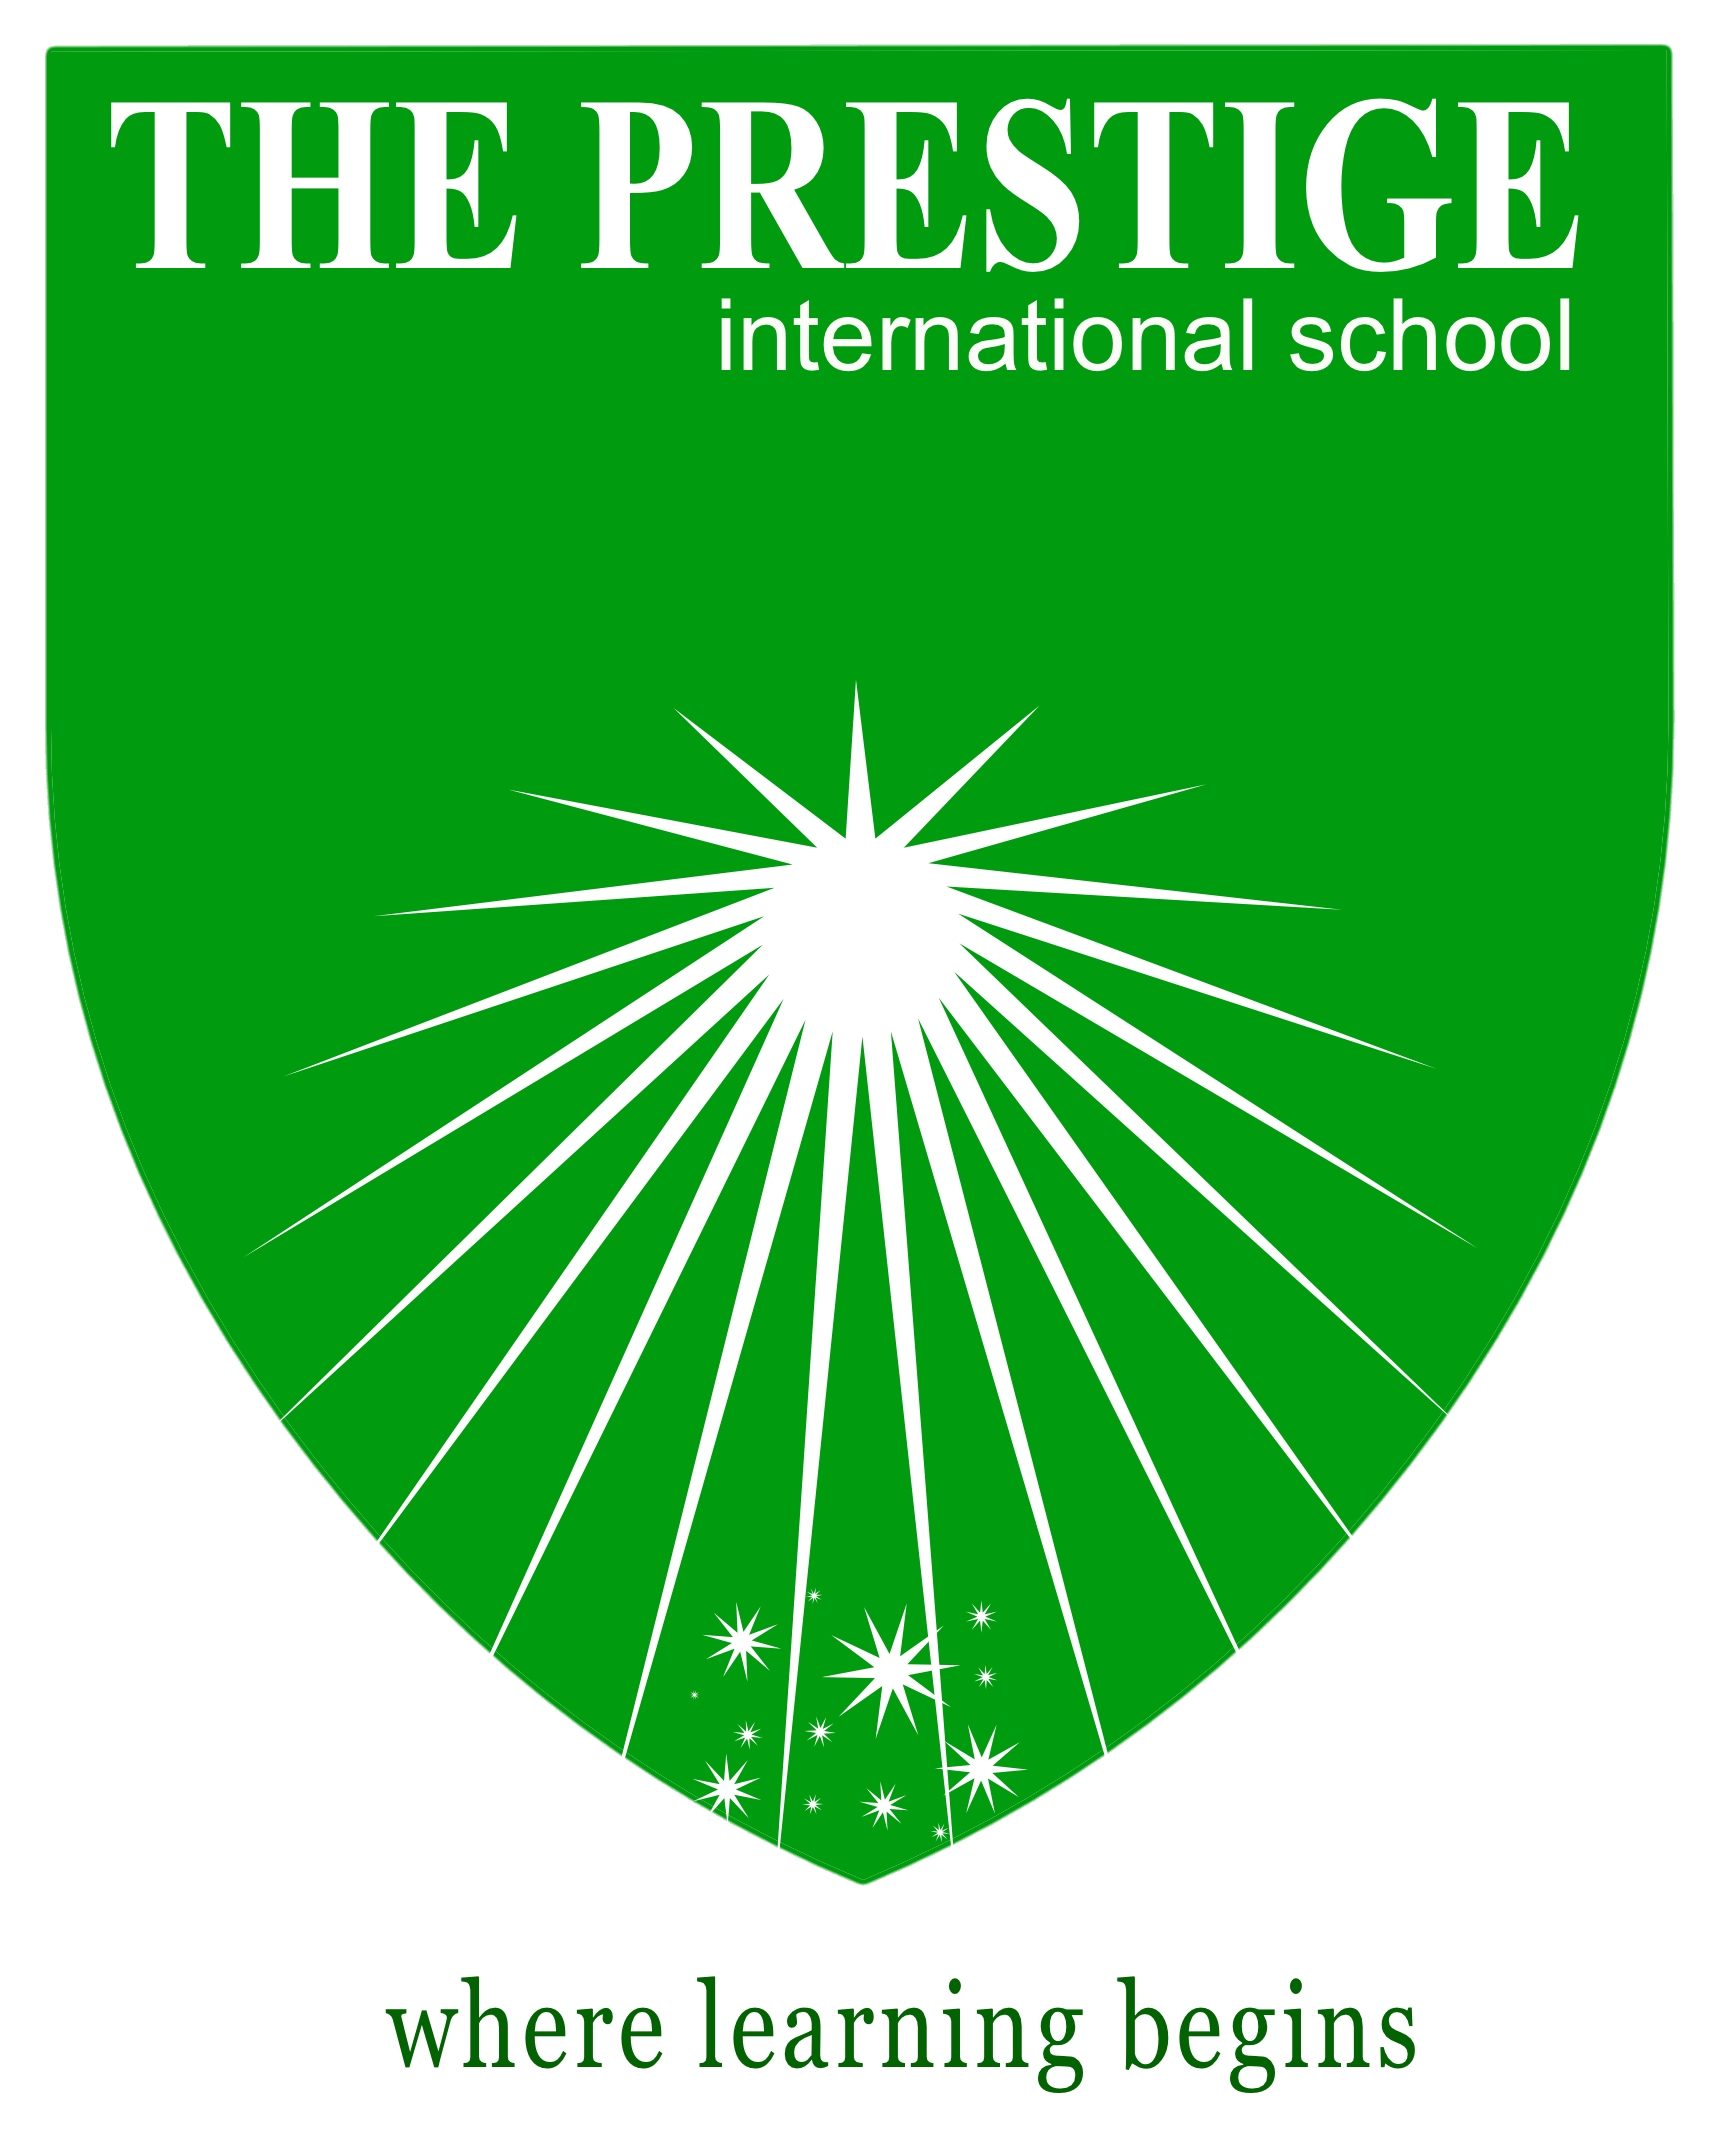 The Prestige International School